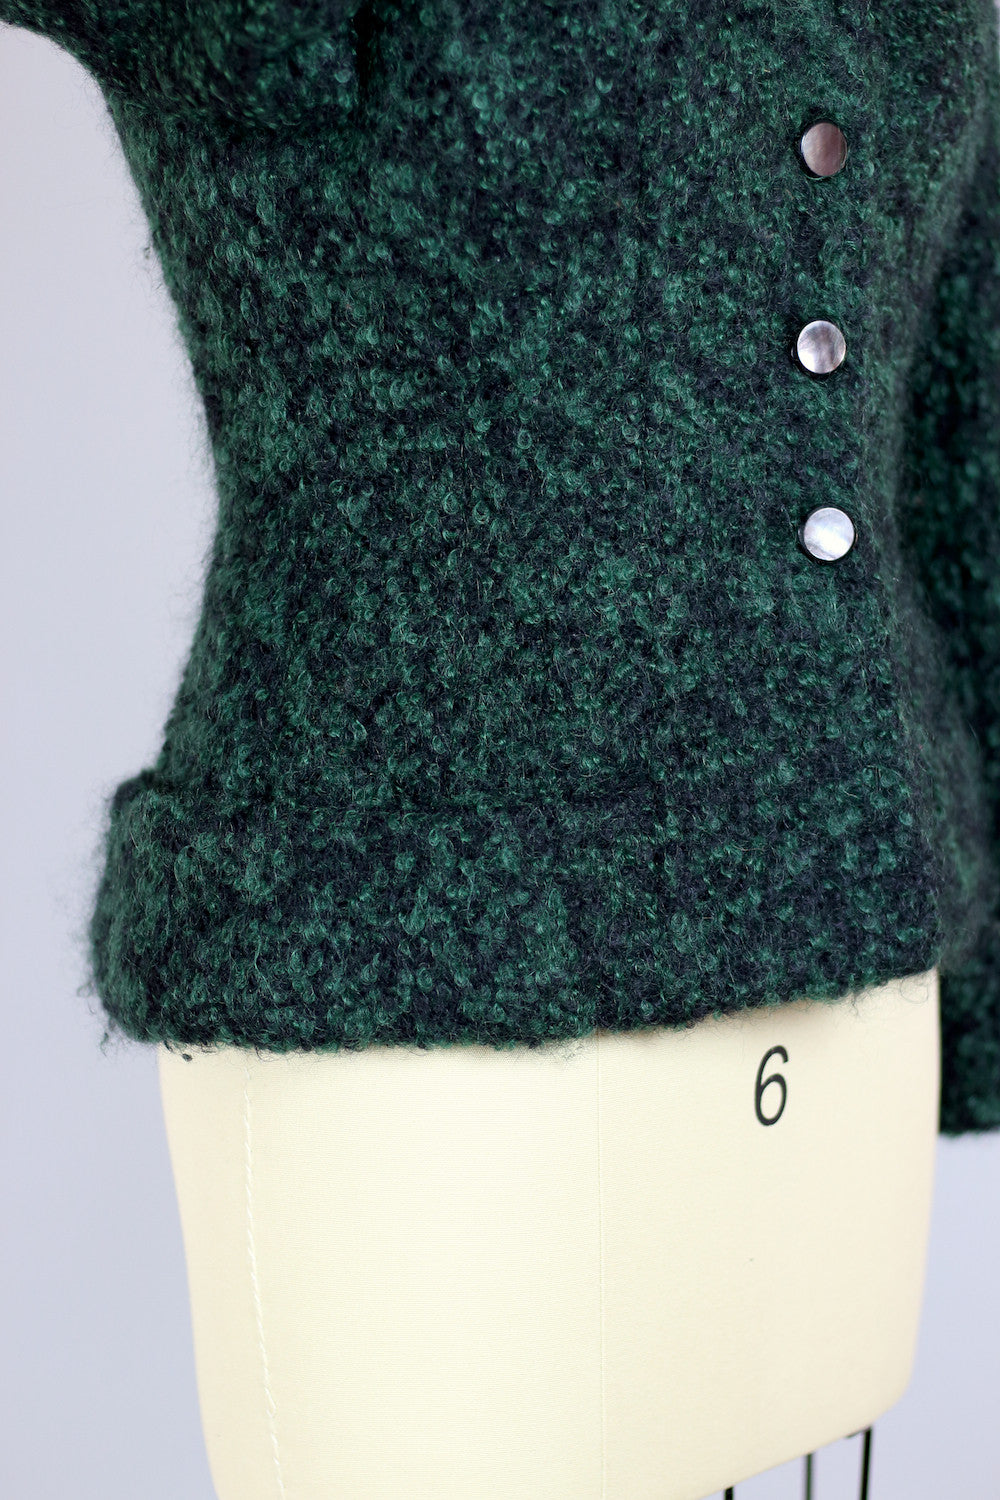 Fabulous 1940s Hunter Green Mohair Jacket